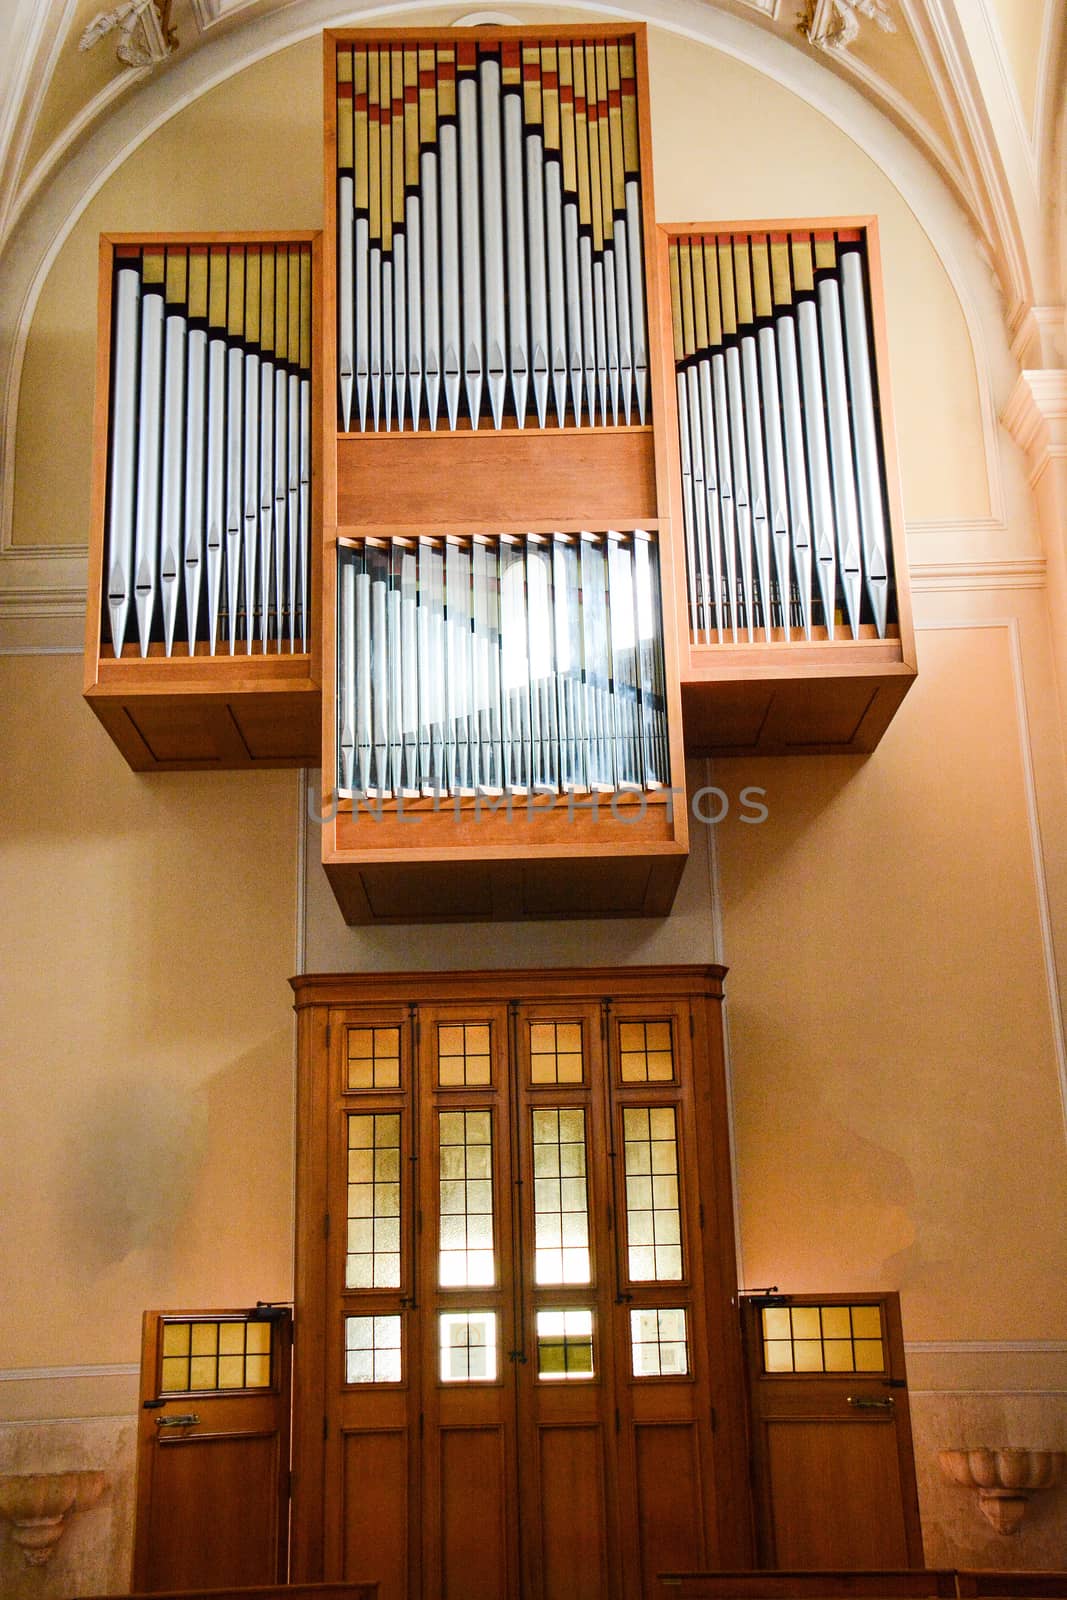 pipe organ by iacobino